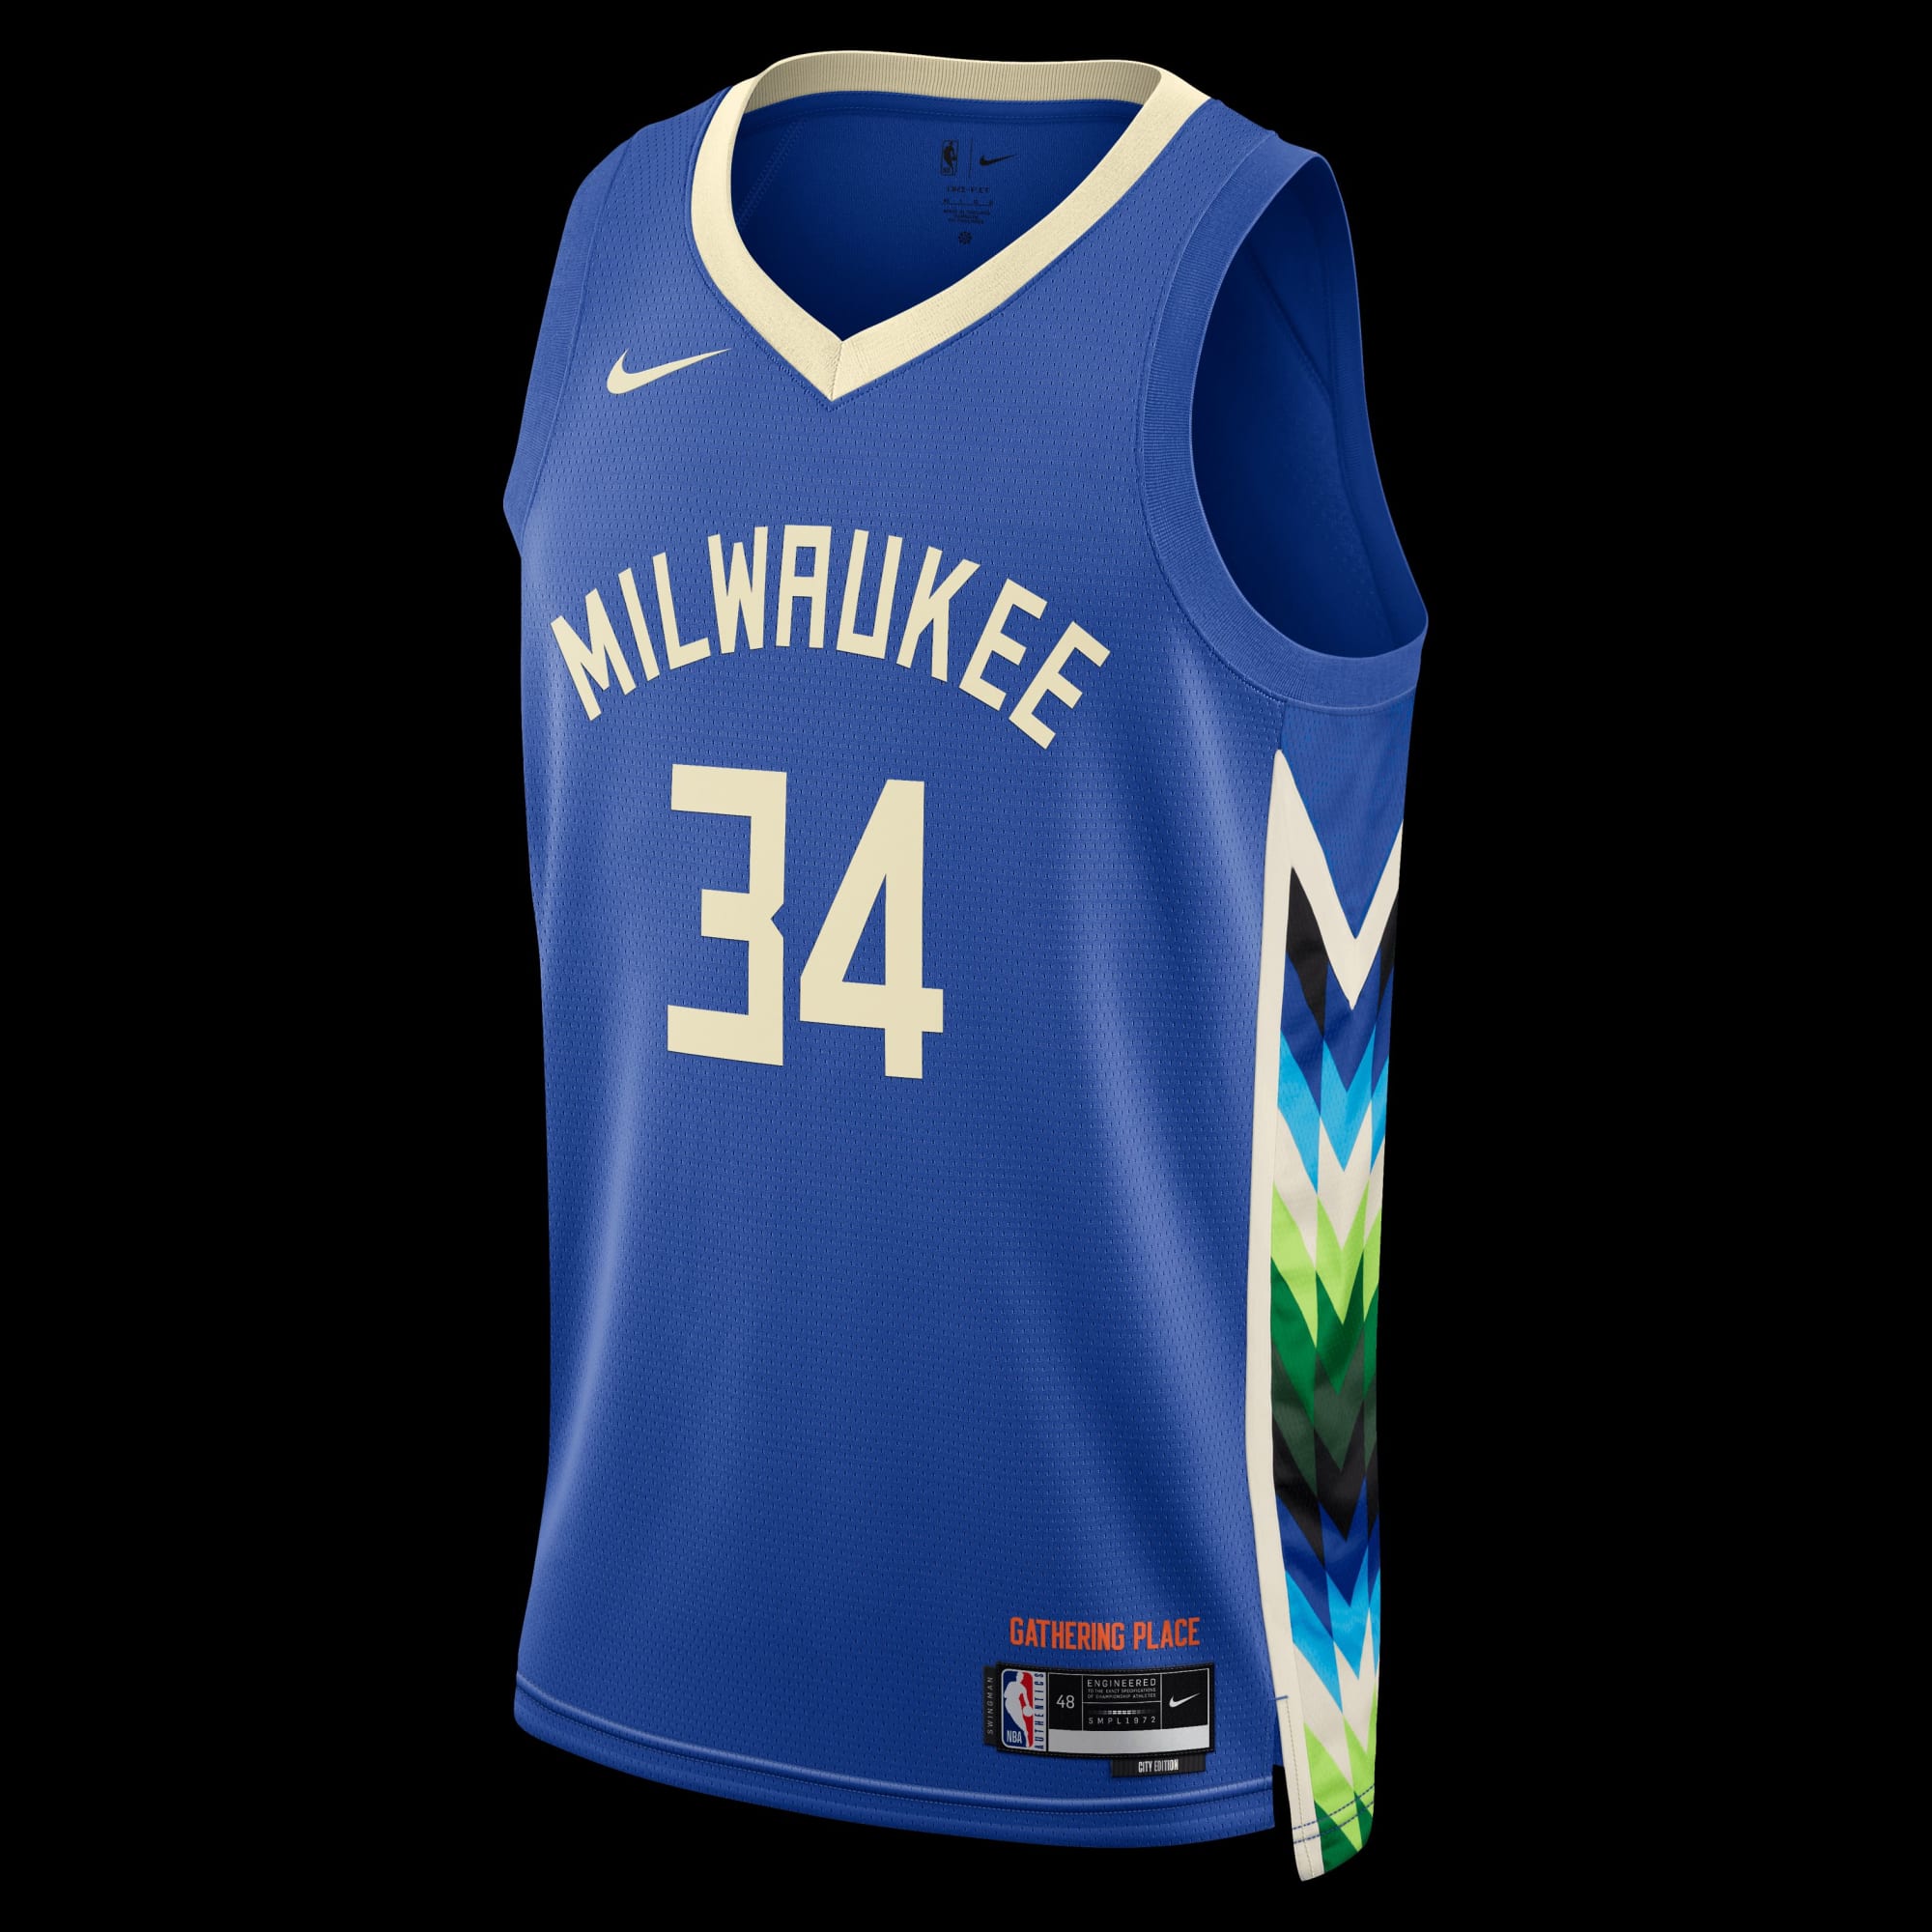 Milwaukee Bucks unveil new 'Gathering Place' uniforms for 2022-23